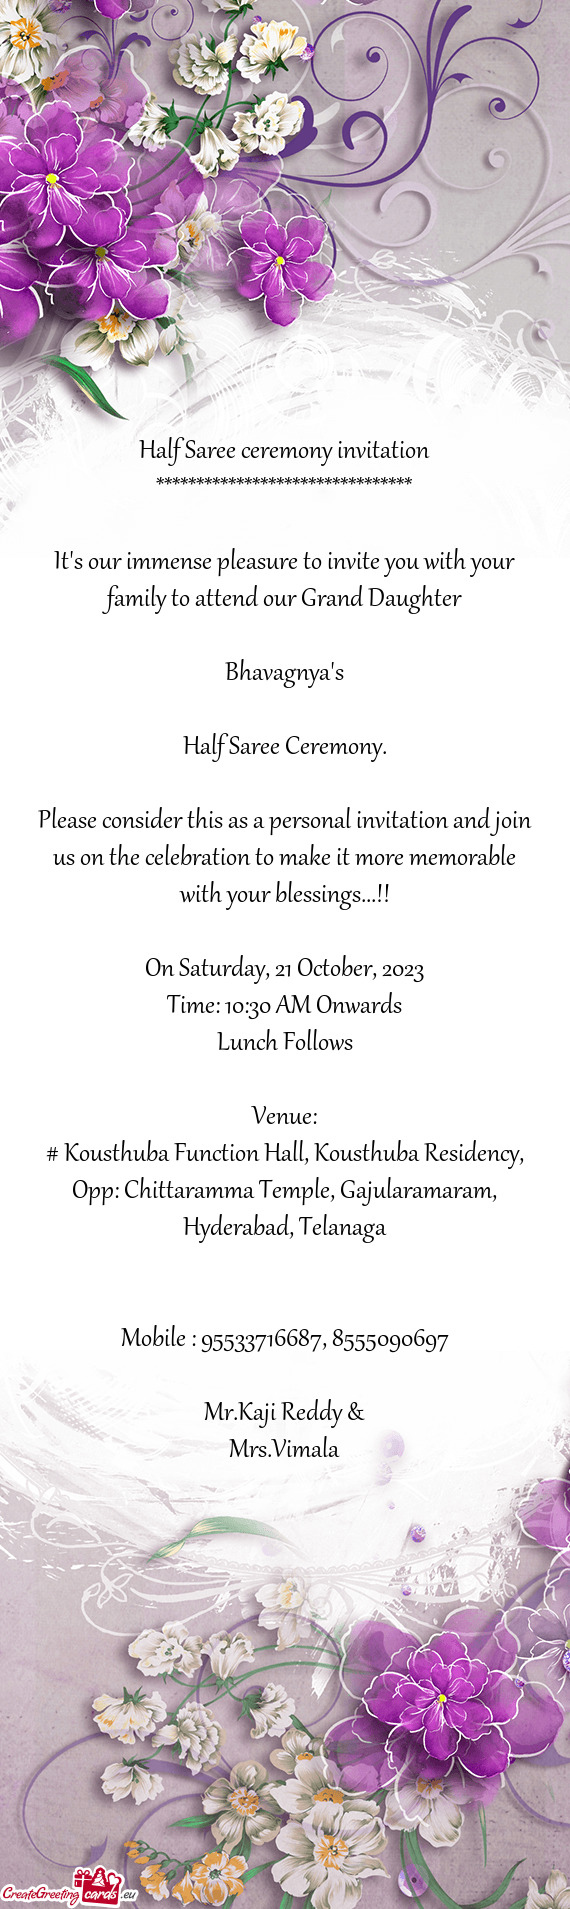 # Kousthuba Function Hall, Kousthuba Residency, Opp: Chittaramma Temple, Gajularamaram, Hyderabad, T